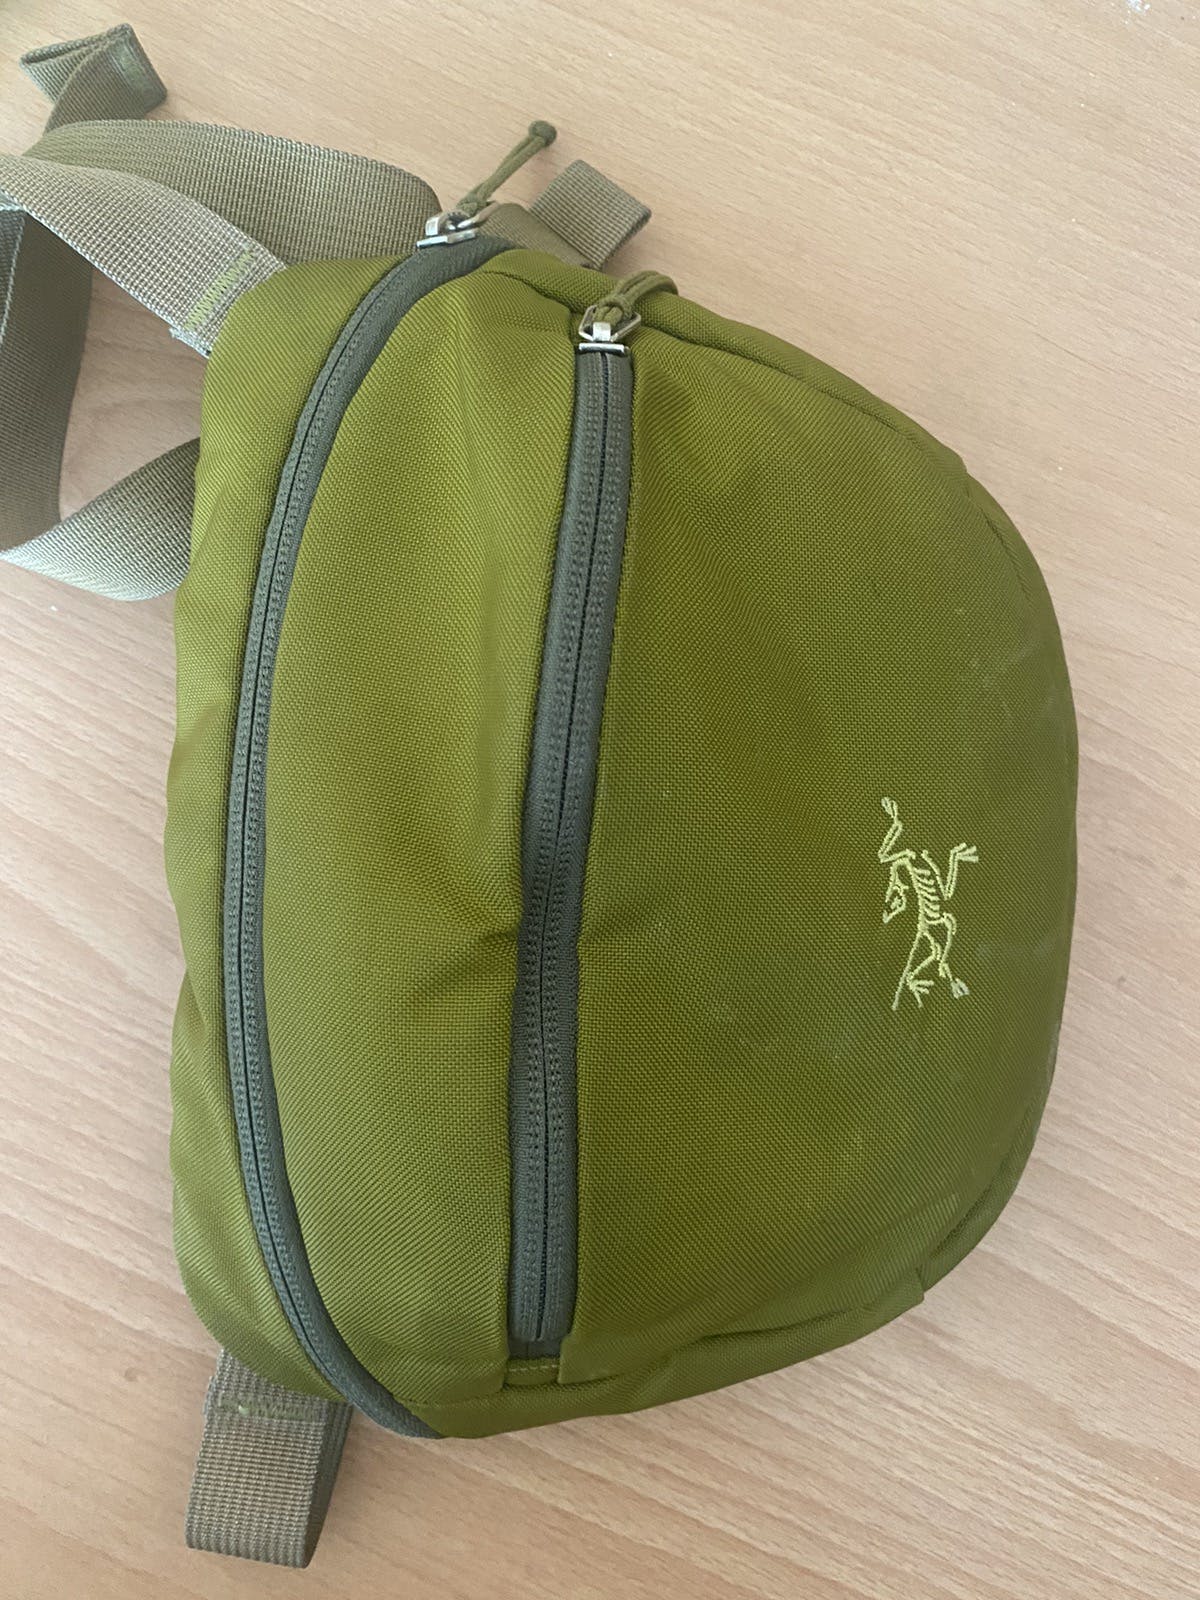 Authentic Arc’teryx Green Army Crossbody Sling Bag - 11